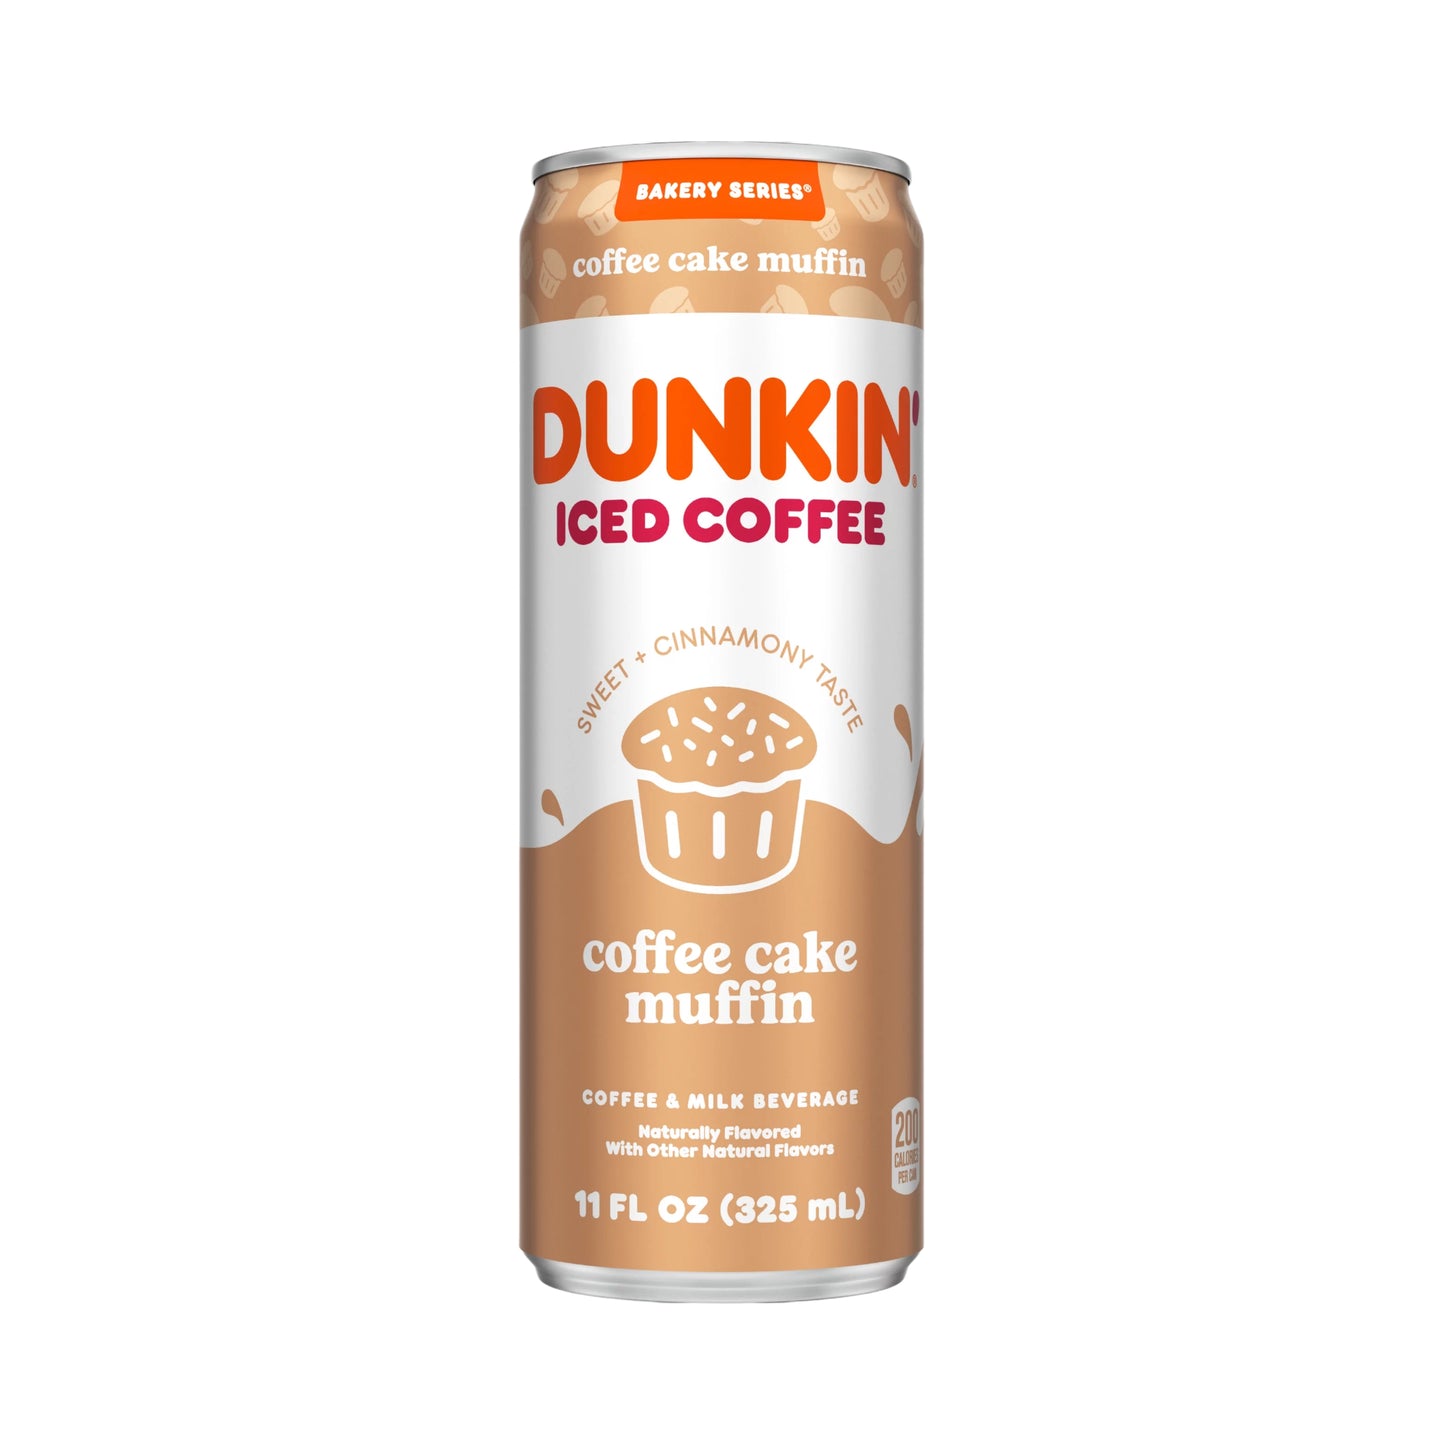 Dunkin Iced Coffee Cake Muffin - 11fl.oz (325ml)